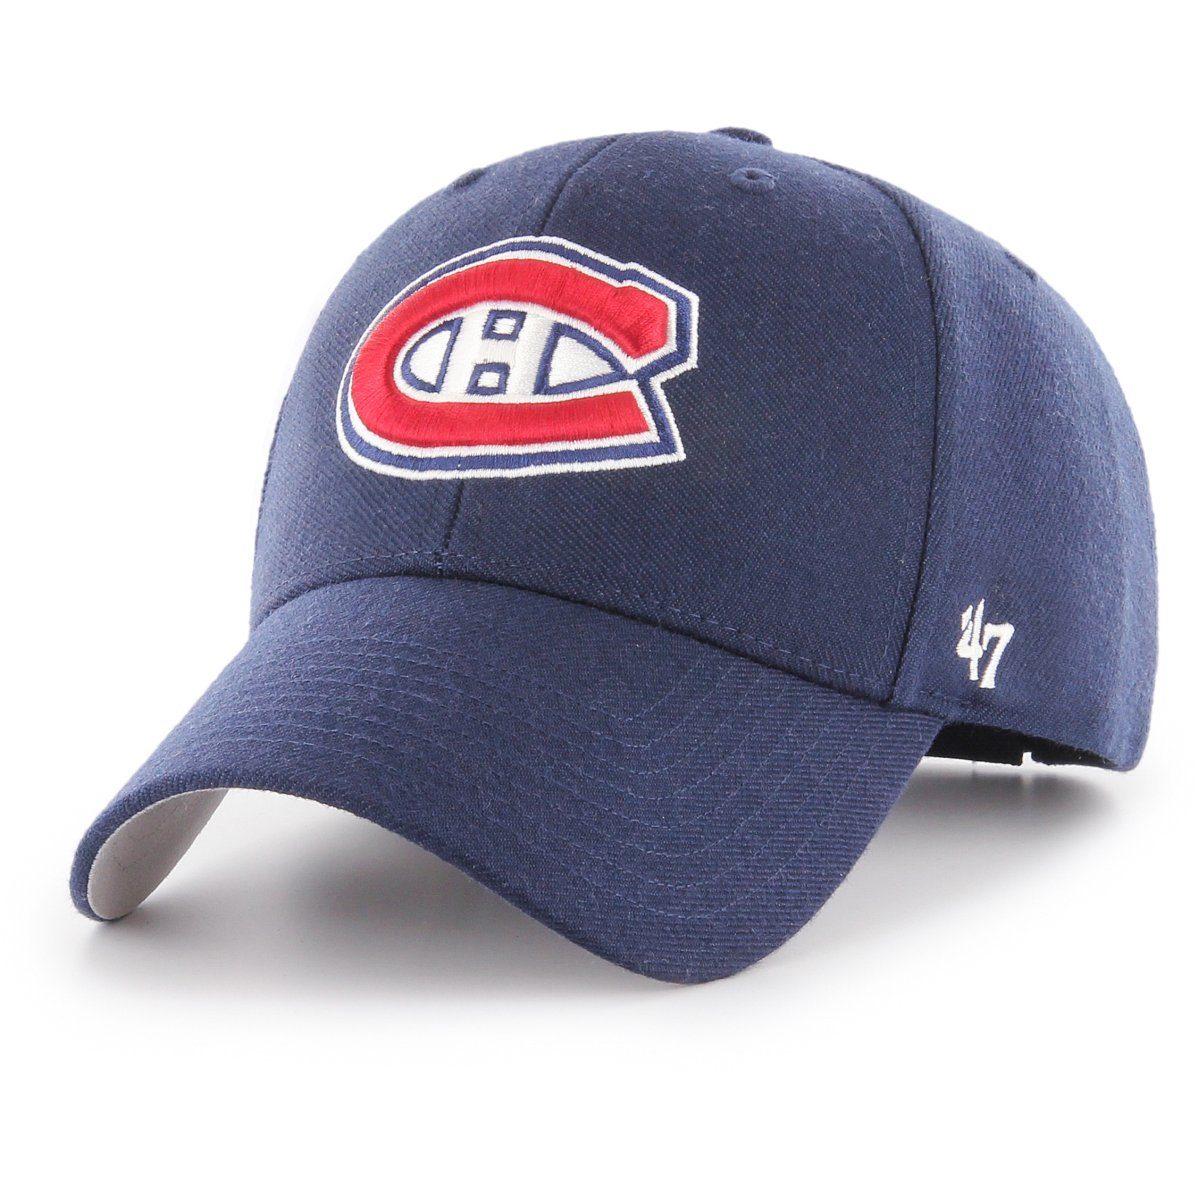 Montreal Cap Brand Baseball NHL Canadians '47